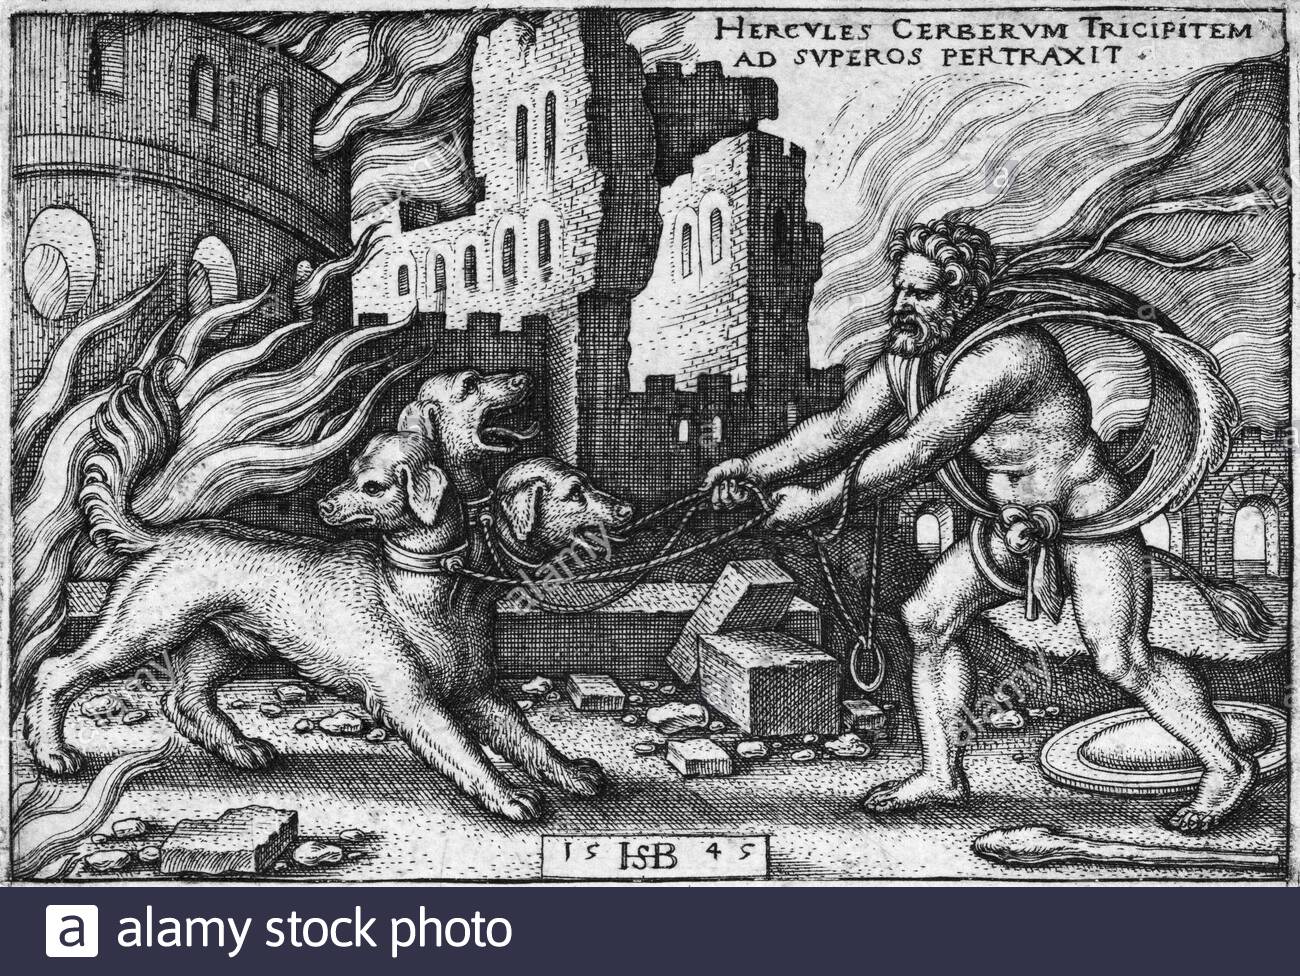 Ancient Roman Mythology, Hercules and Cerberus, vintage illustration from 1545 Stock Photo